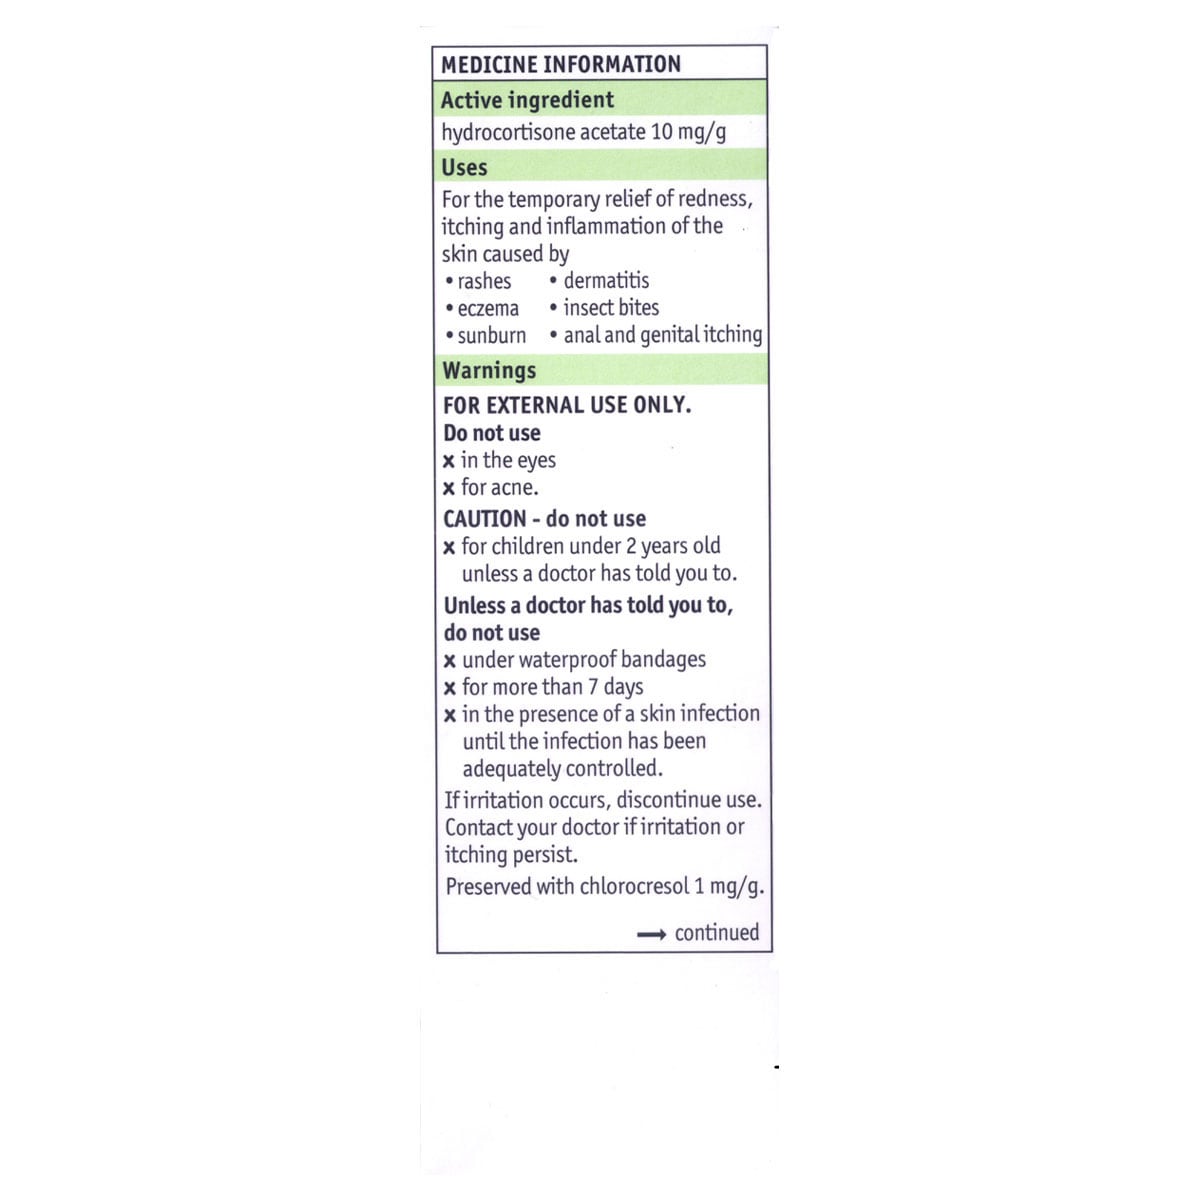 Cortic-DS Hydrocortisone (1%) Cream 30g